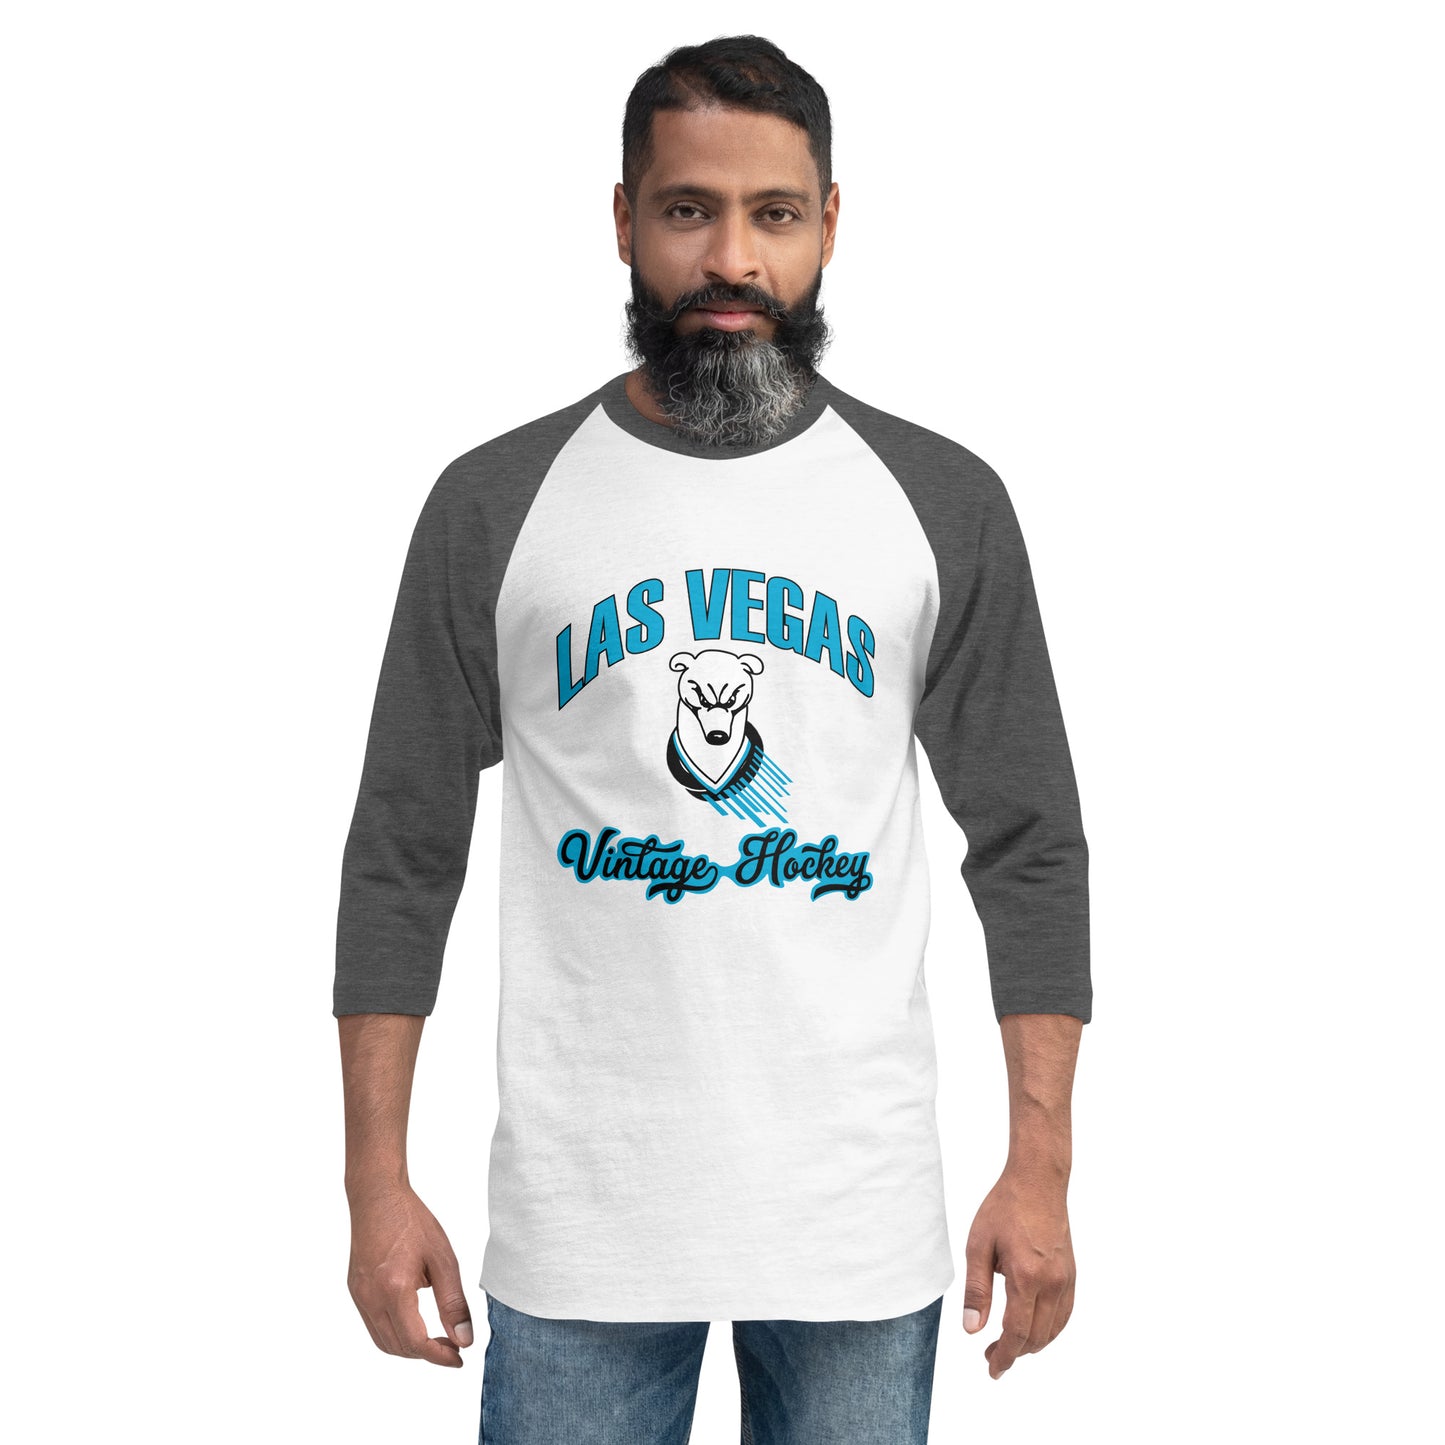 Las Vegas Las Vegas Vintage Hockey 3/4 Sleeve Raglan Shirt - White/Heather Charcoal